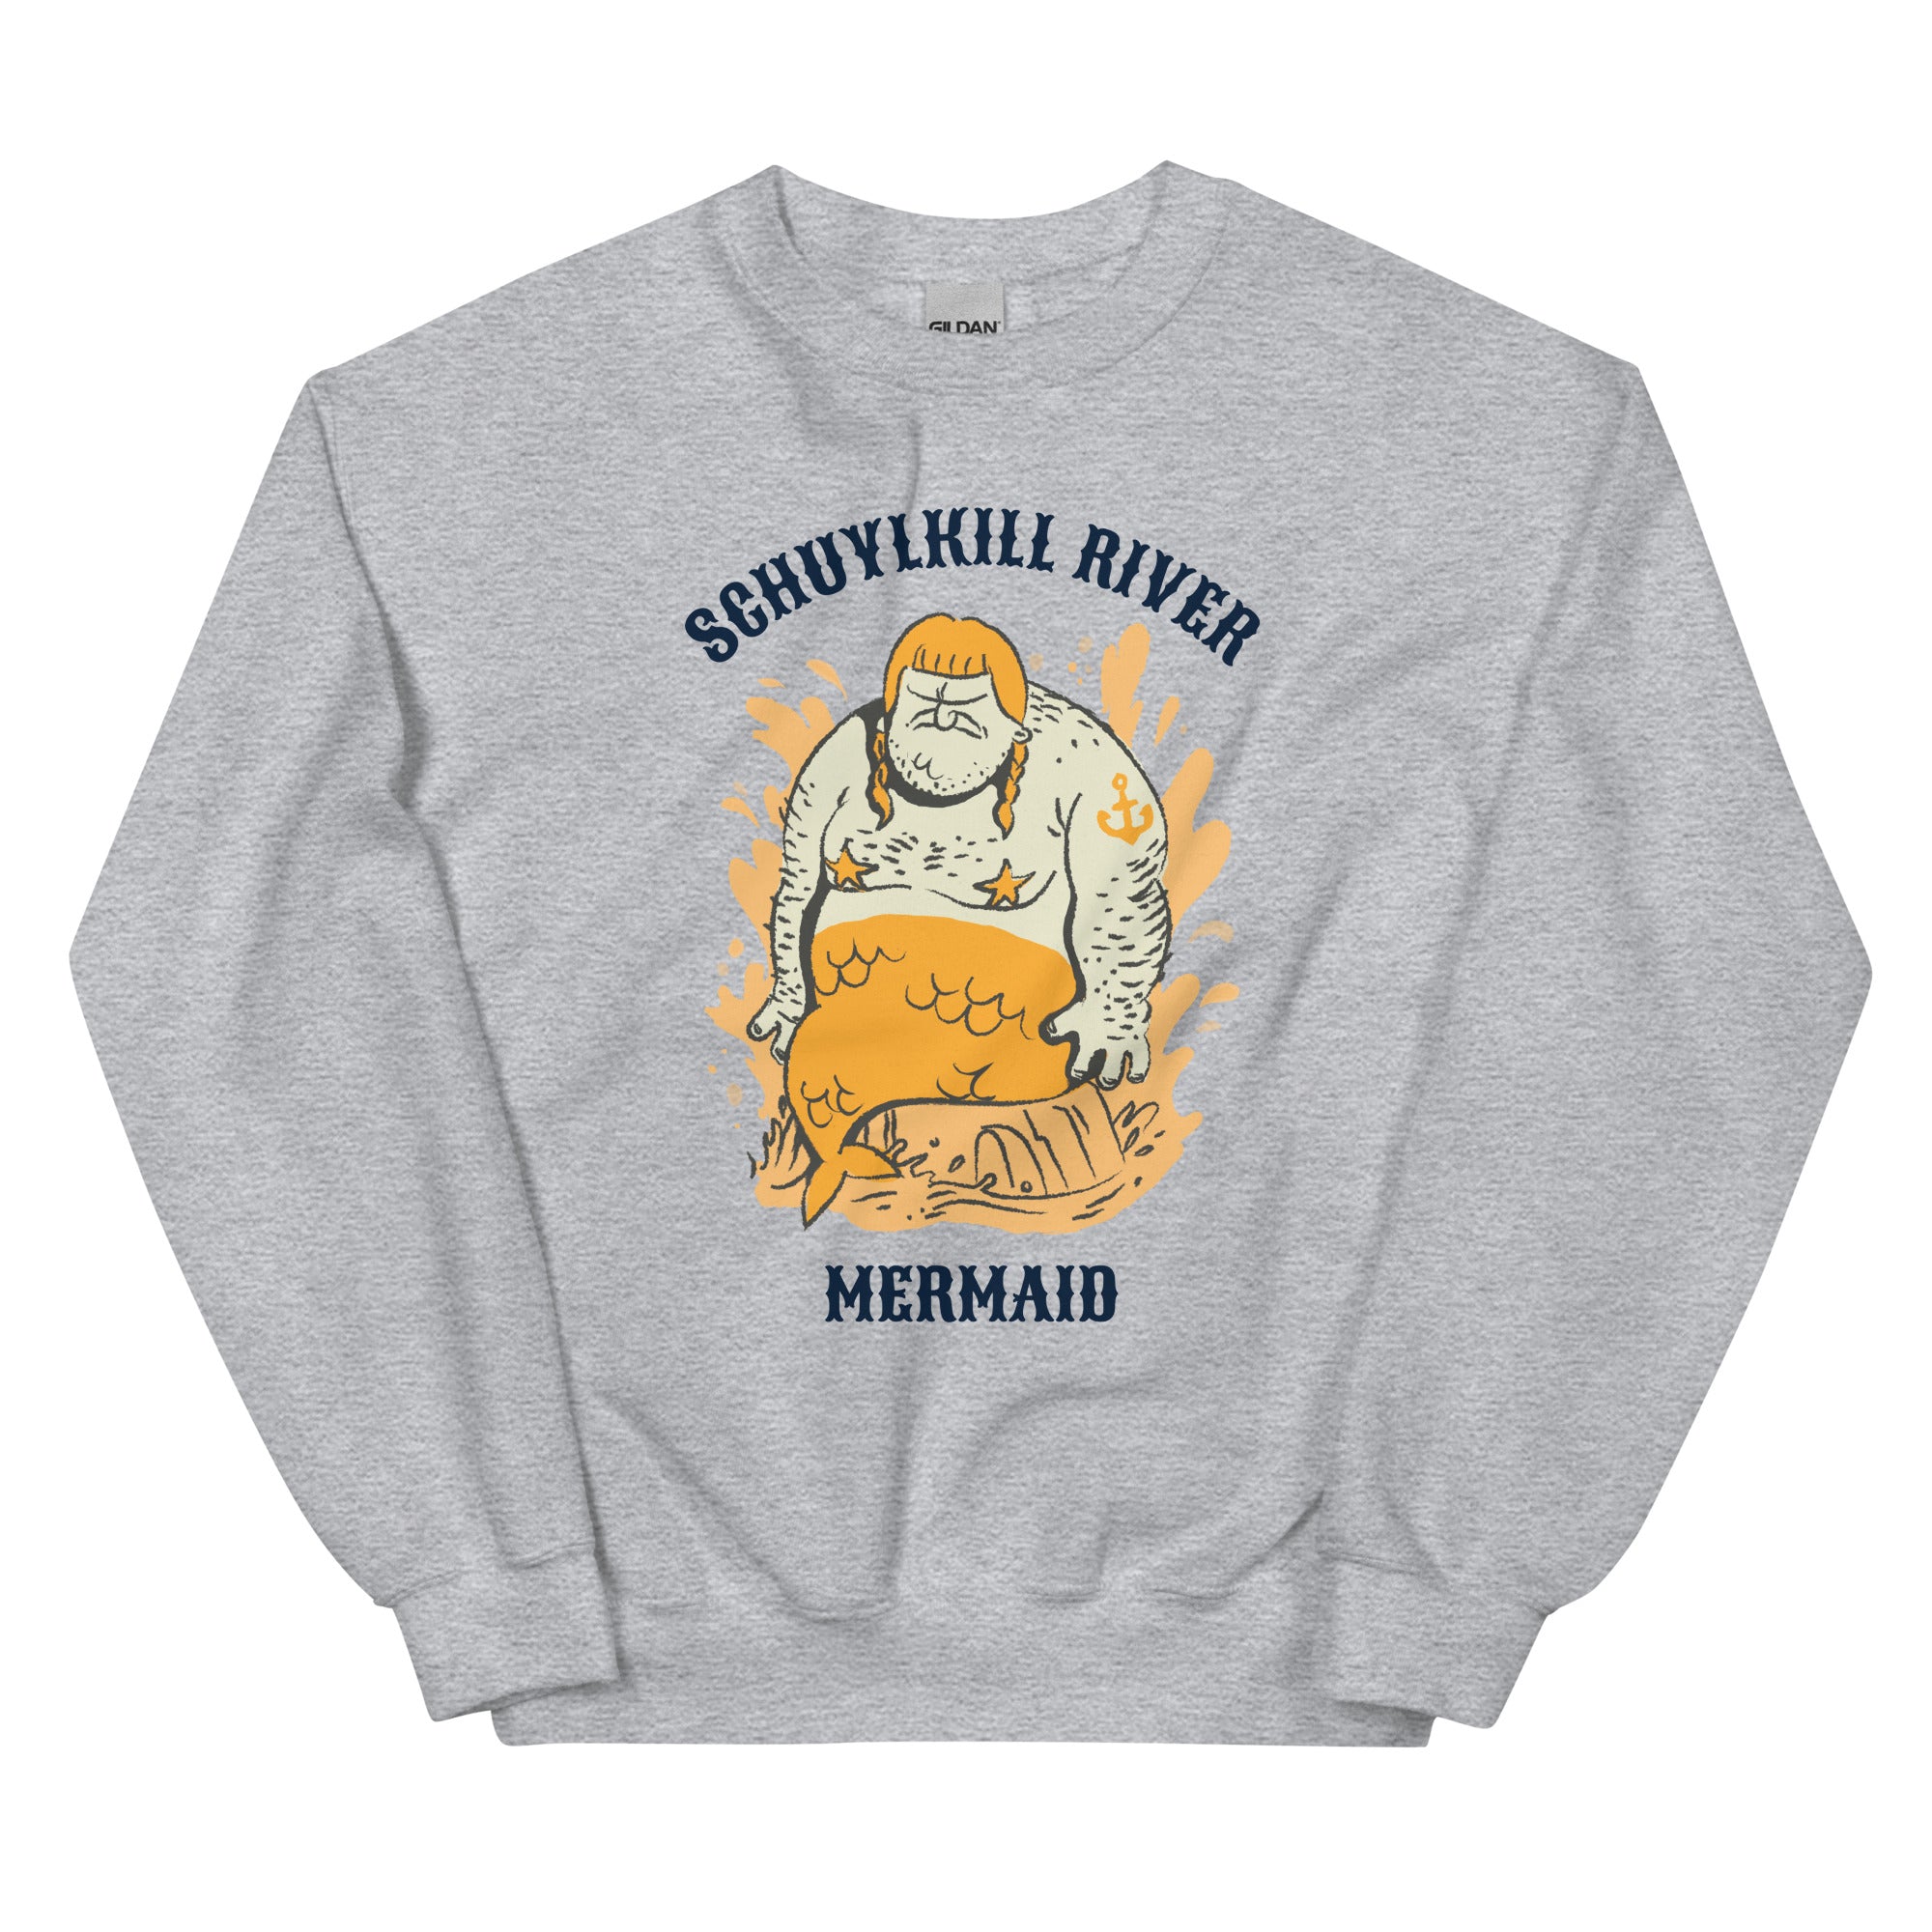 Funny Philadelphia Schuylkill River Mermaid sport grey sweatshirt from Phillygoat